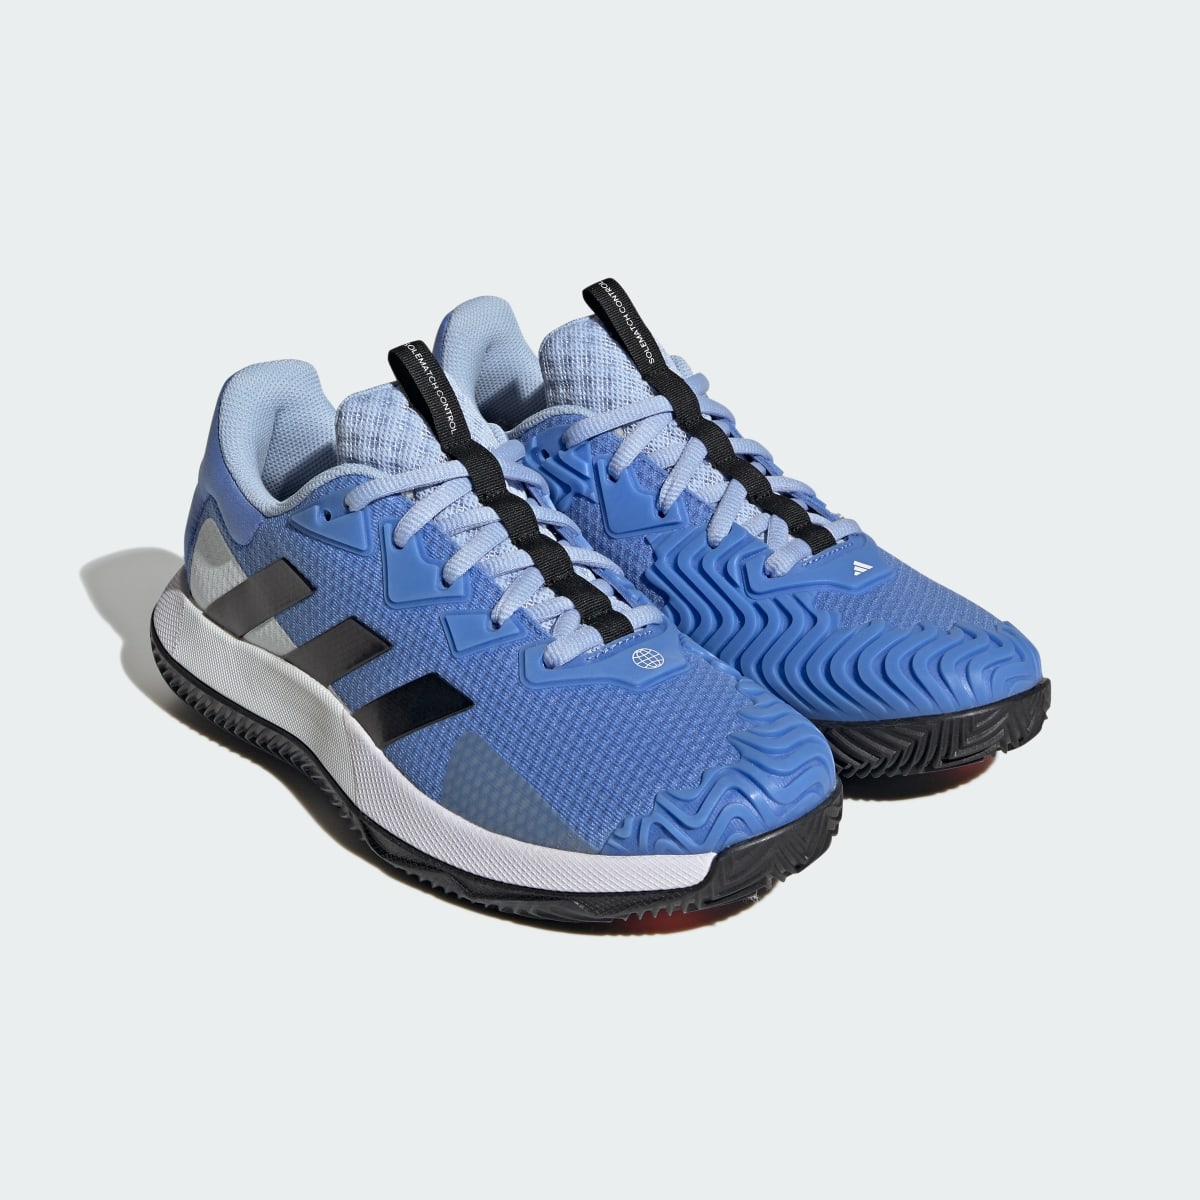 Adidas Chaussure de tennis SoleMatch Control Terre battue. 5